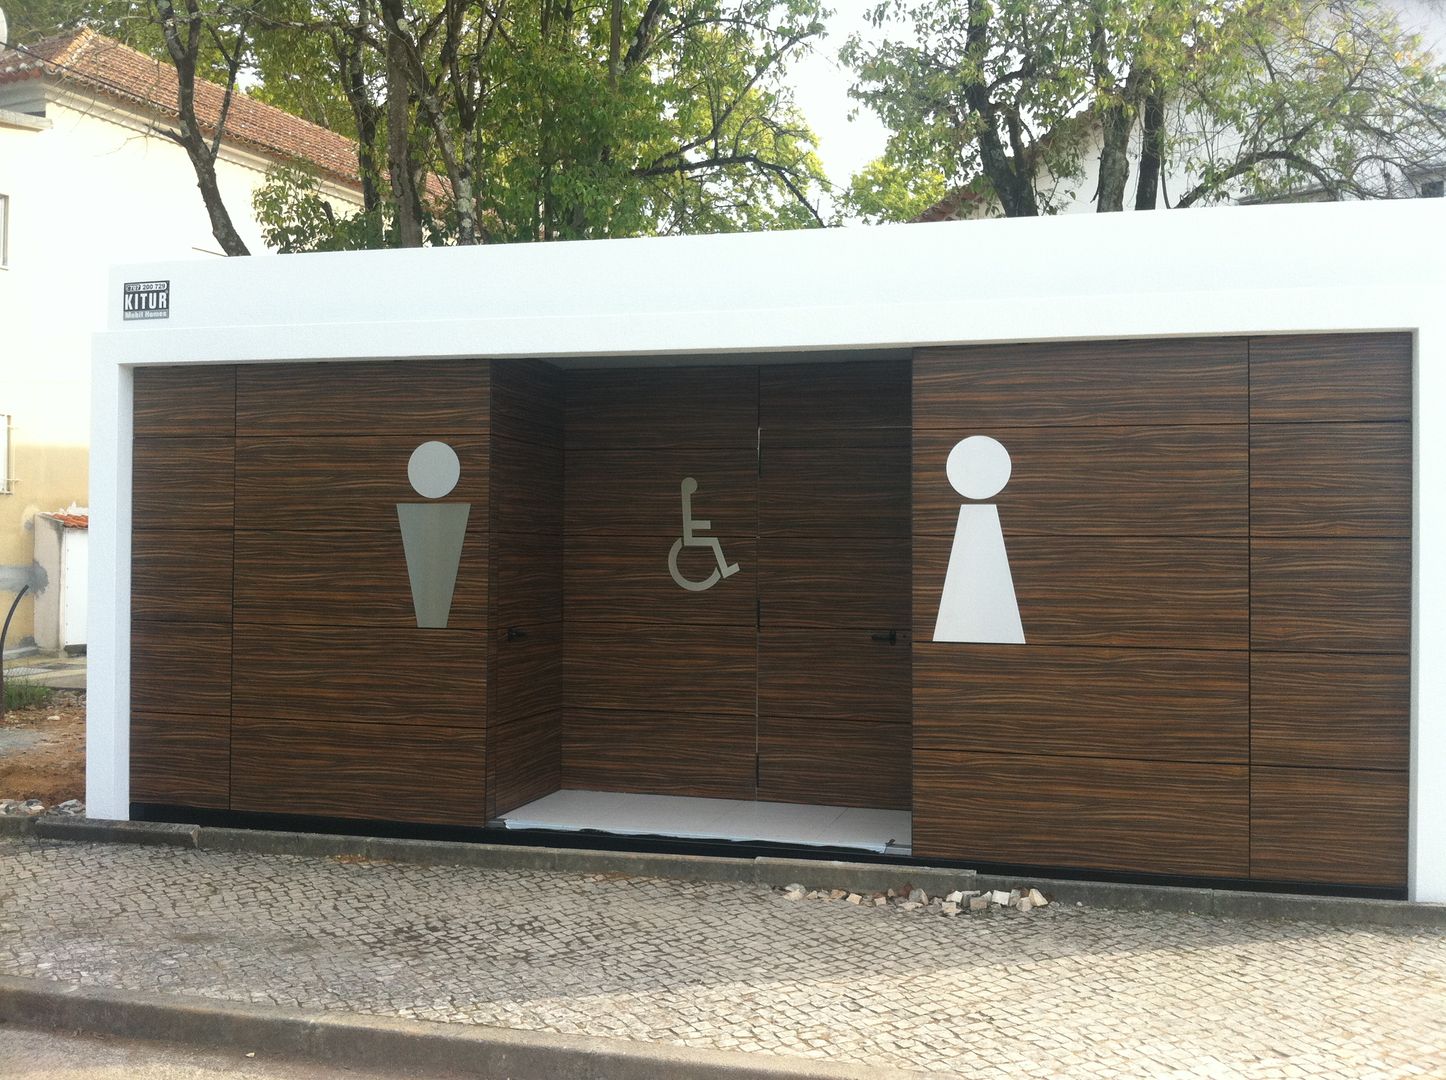 14 Fotos de Casas Modulares Amovíveis, KITUR KITUR Country style bathroom